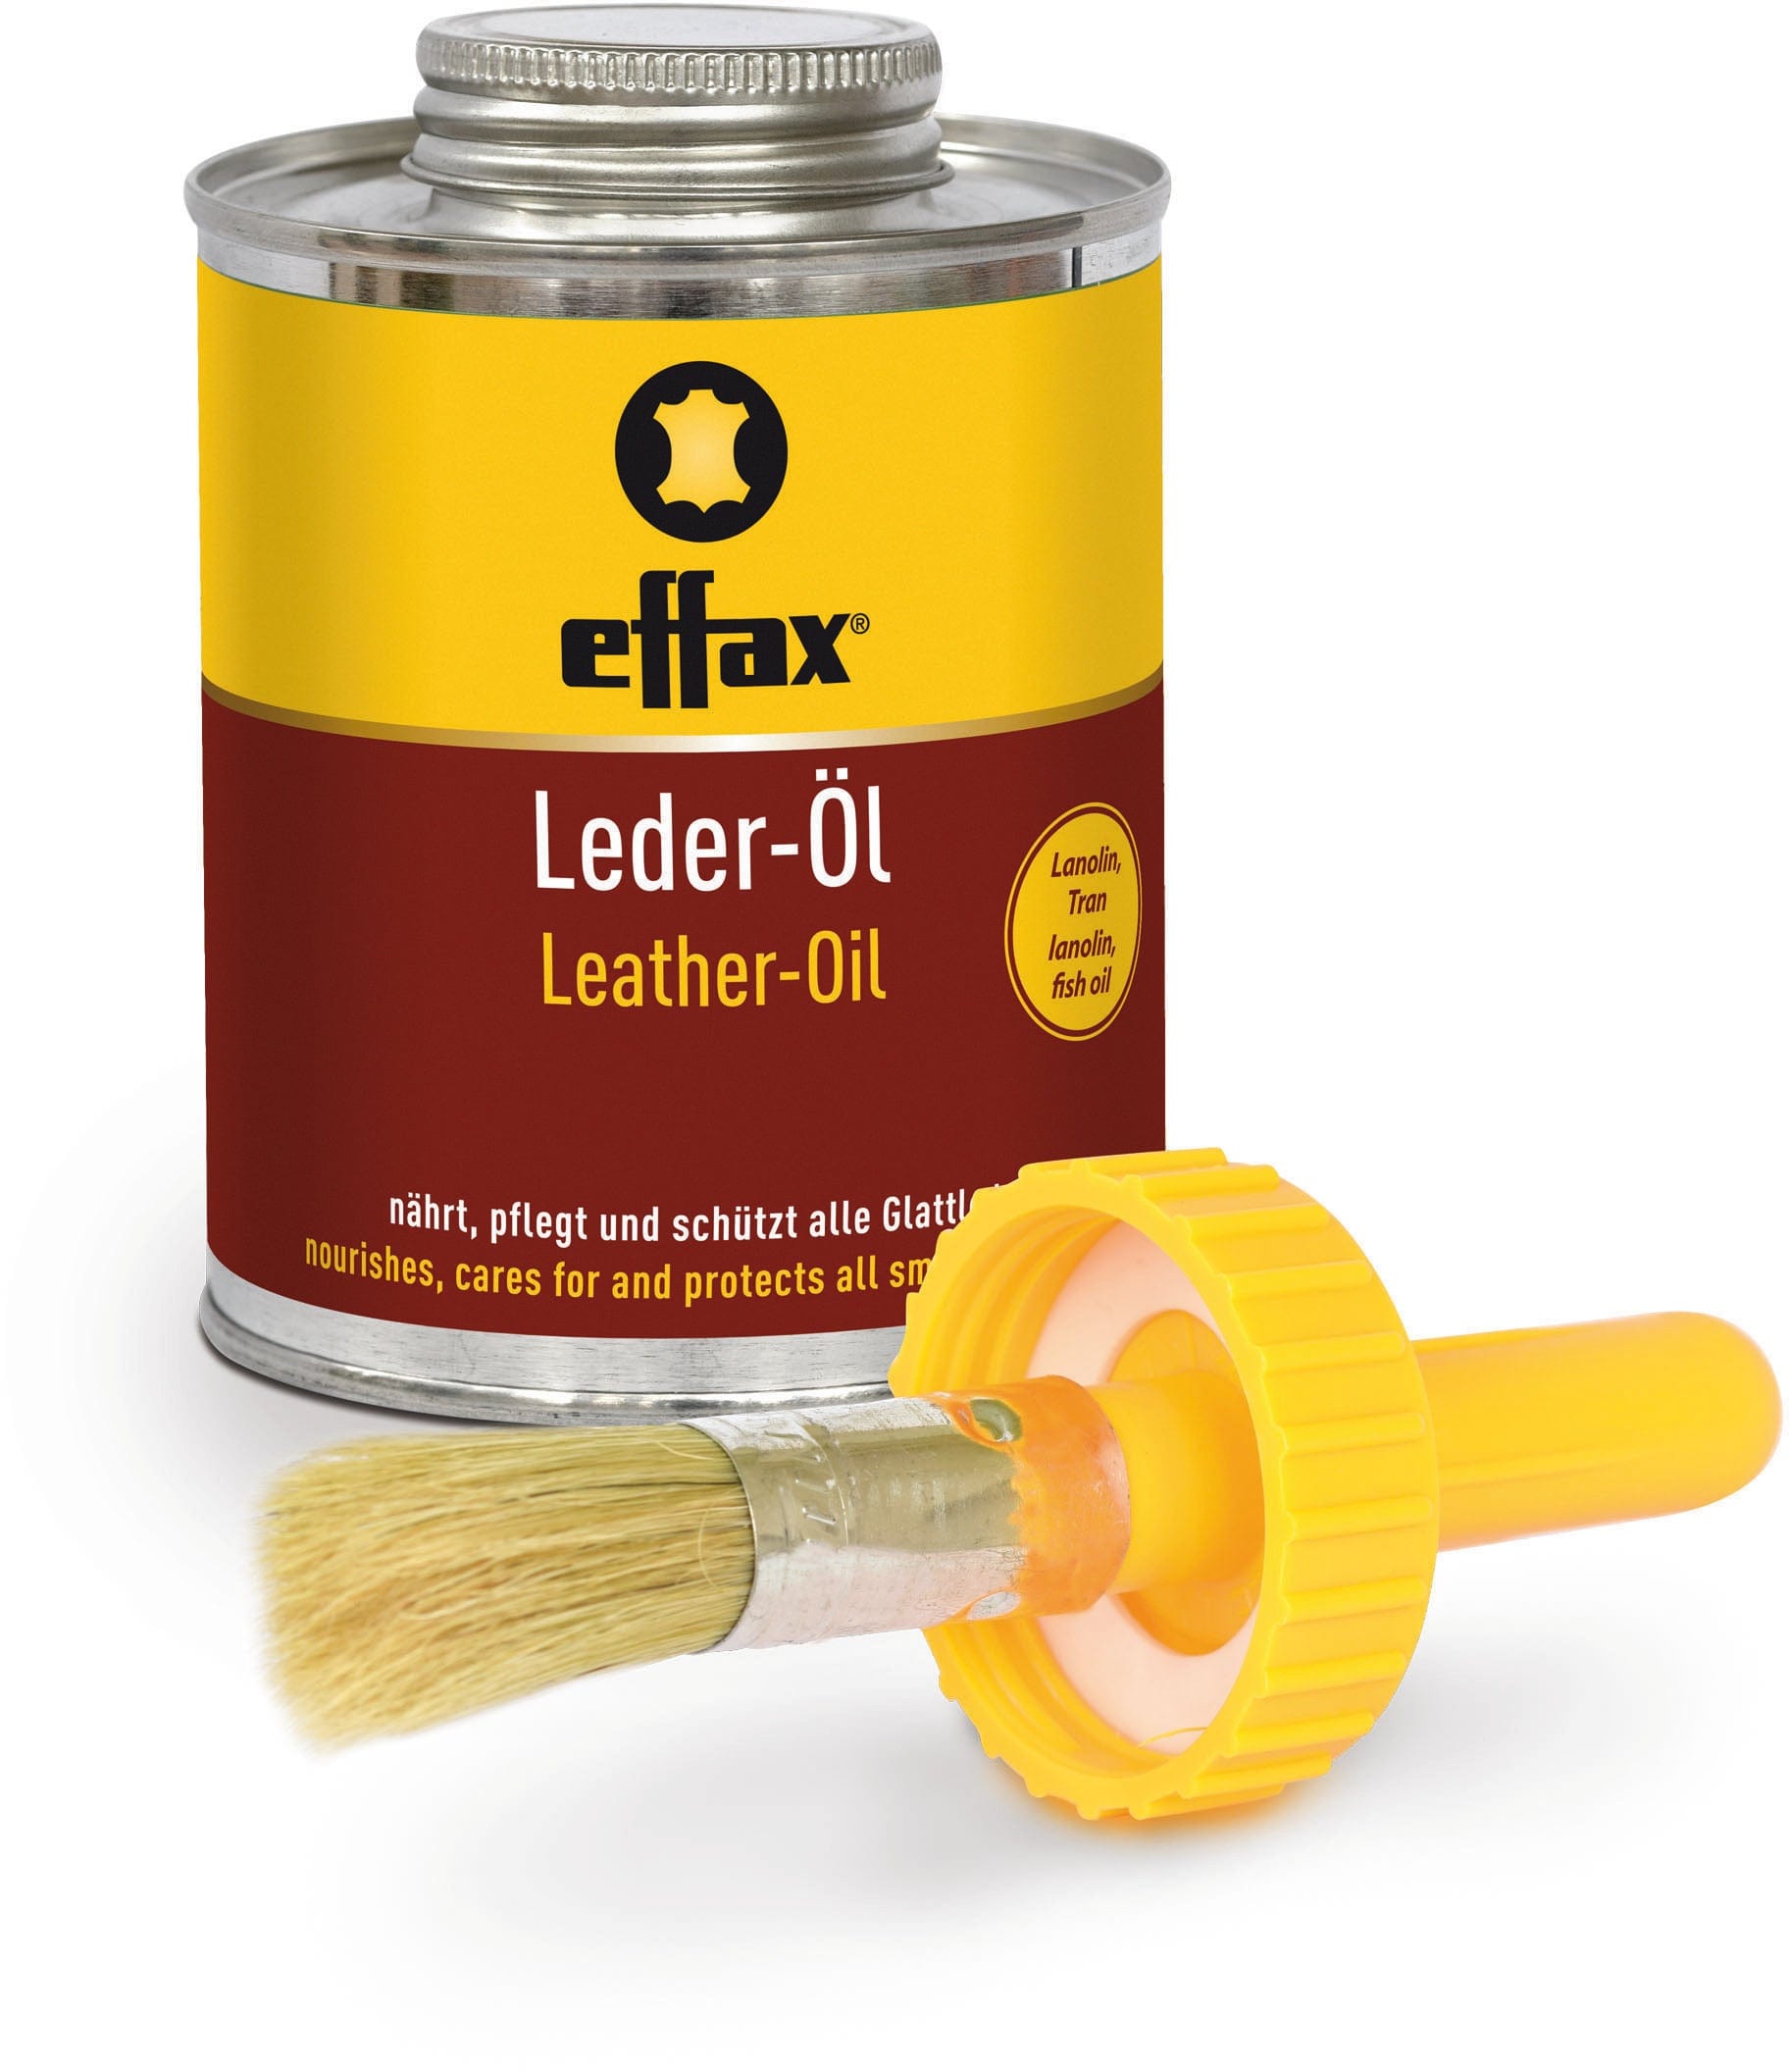 Effax leather oil